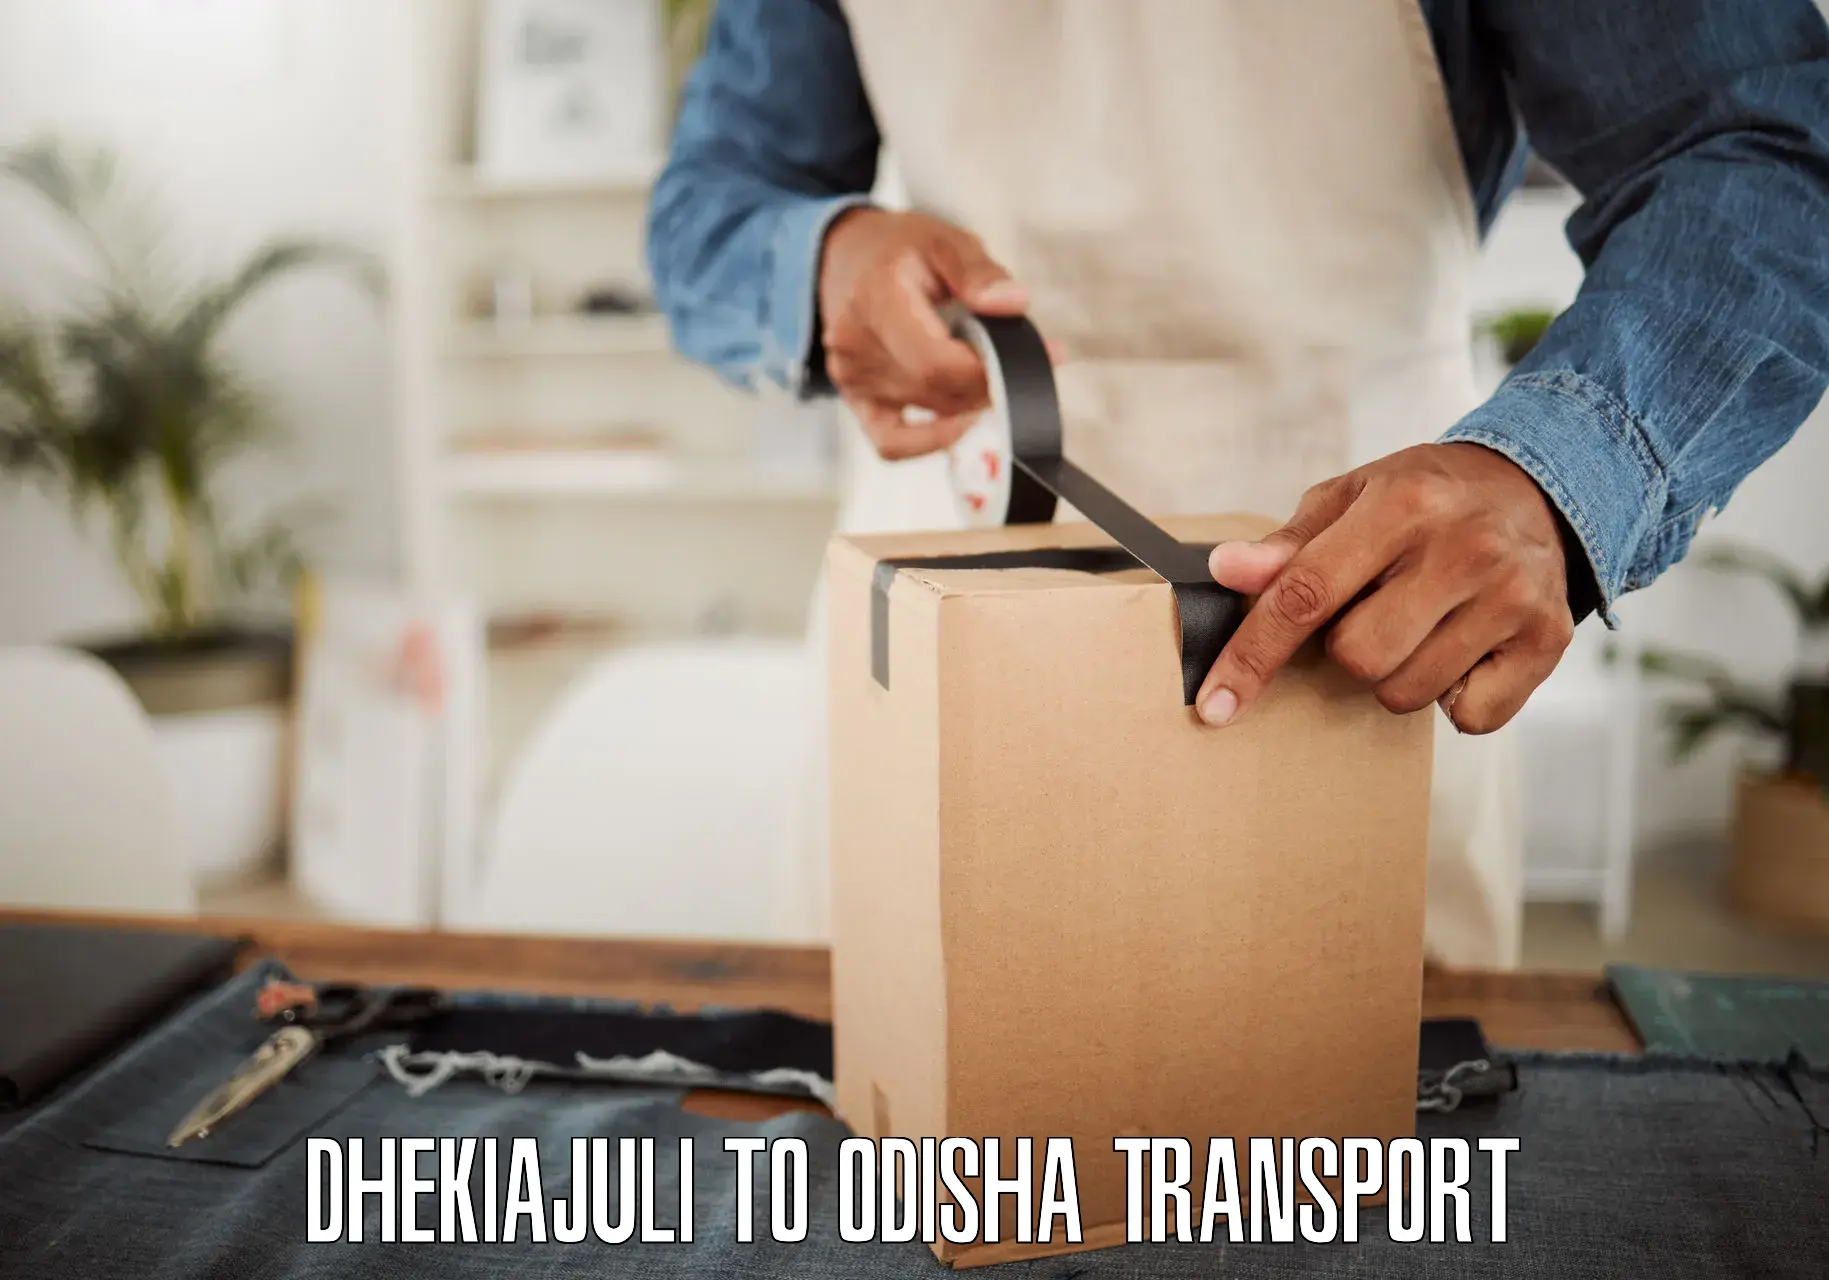 Transport bike from one state to another Dhekiajuli to Kesinga